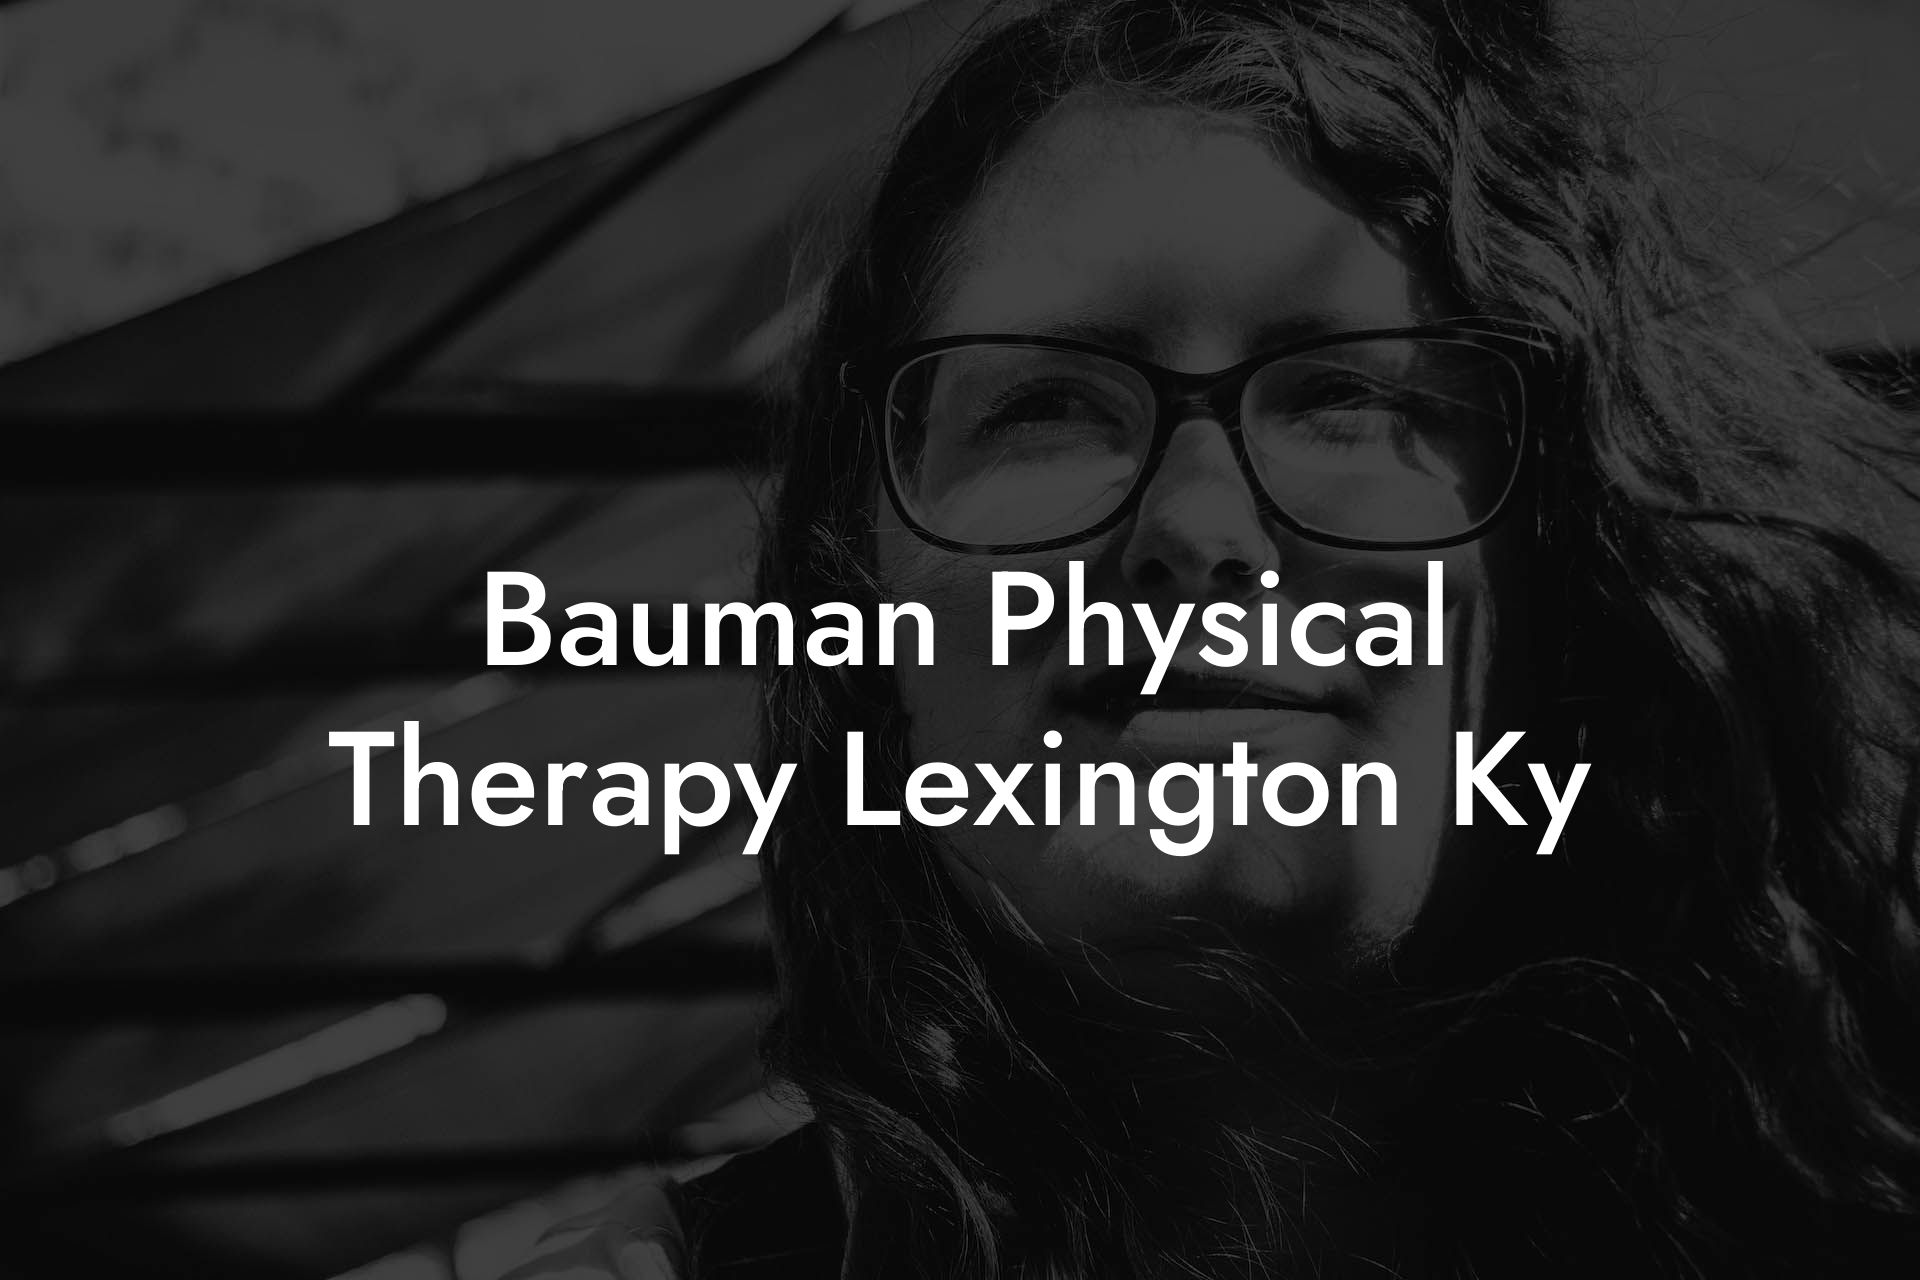 Bauman Physical Therapy Lexington Ky